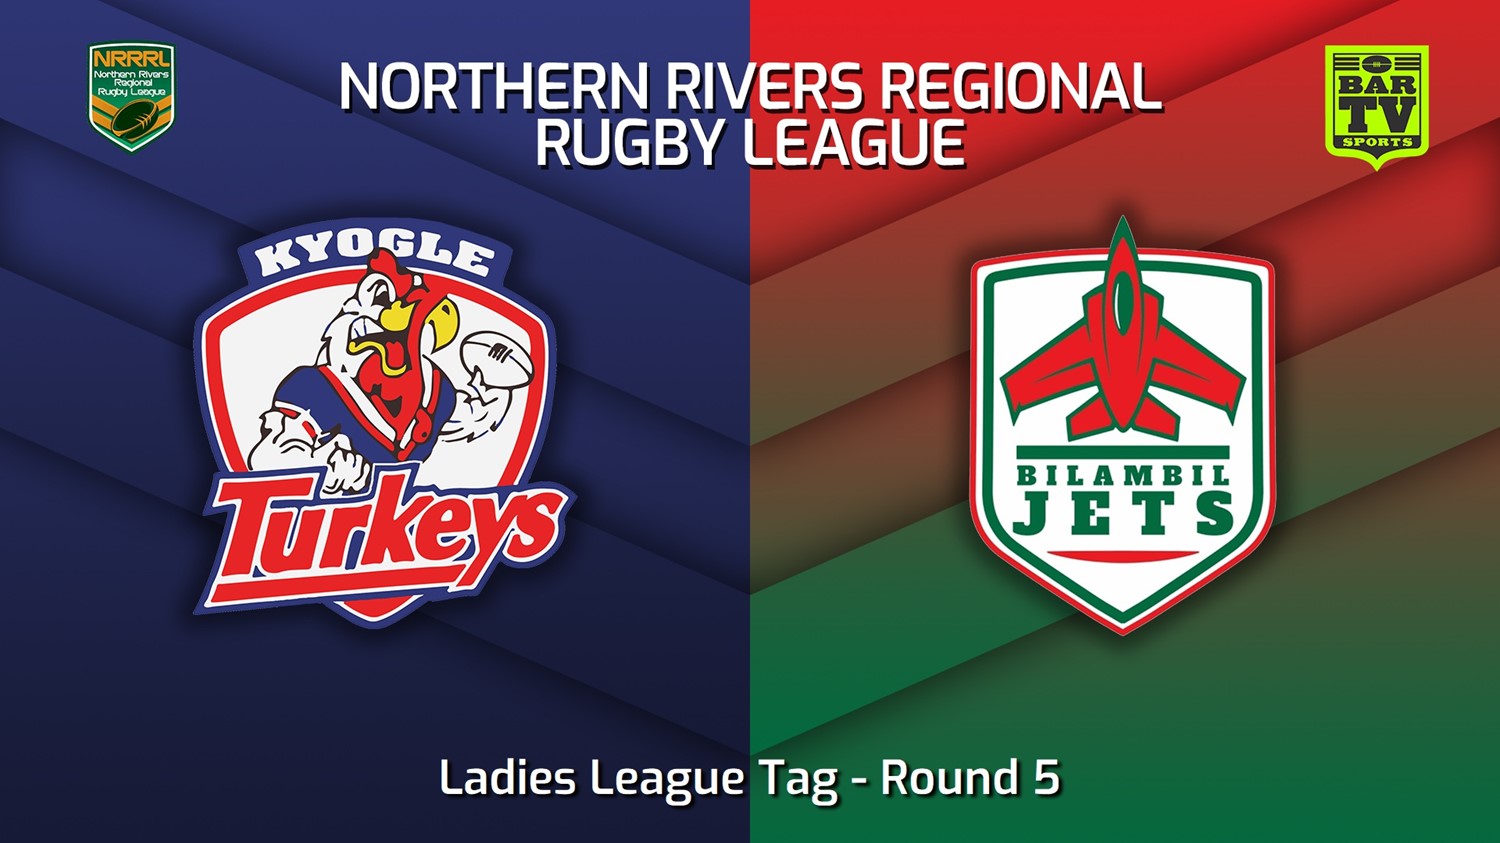 220807-Northern Rivers Round 5 - Ladies League Tag - Kyogle Turkeys v Bilambil Jets Slate Image